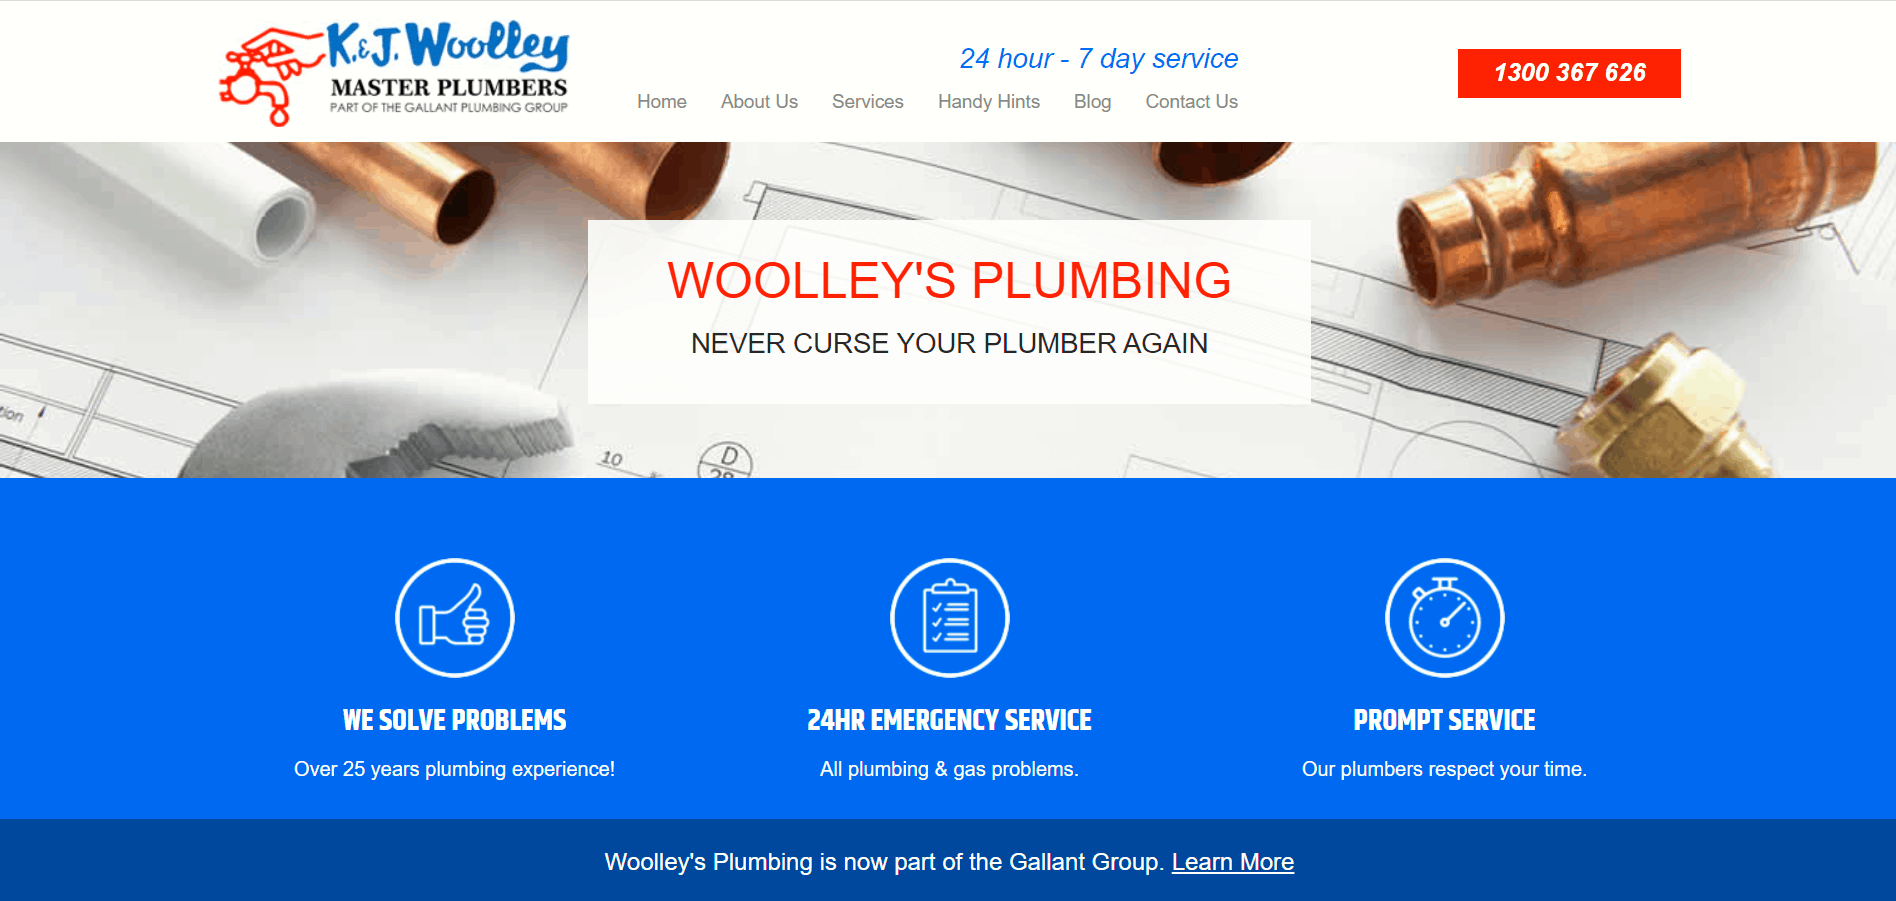 Woolley's Plumbing